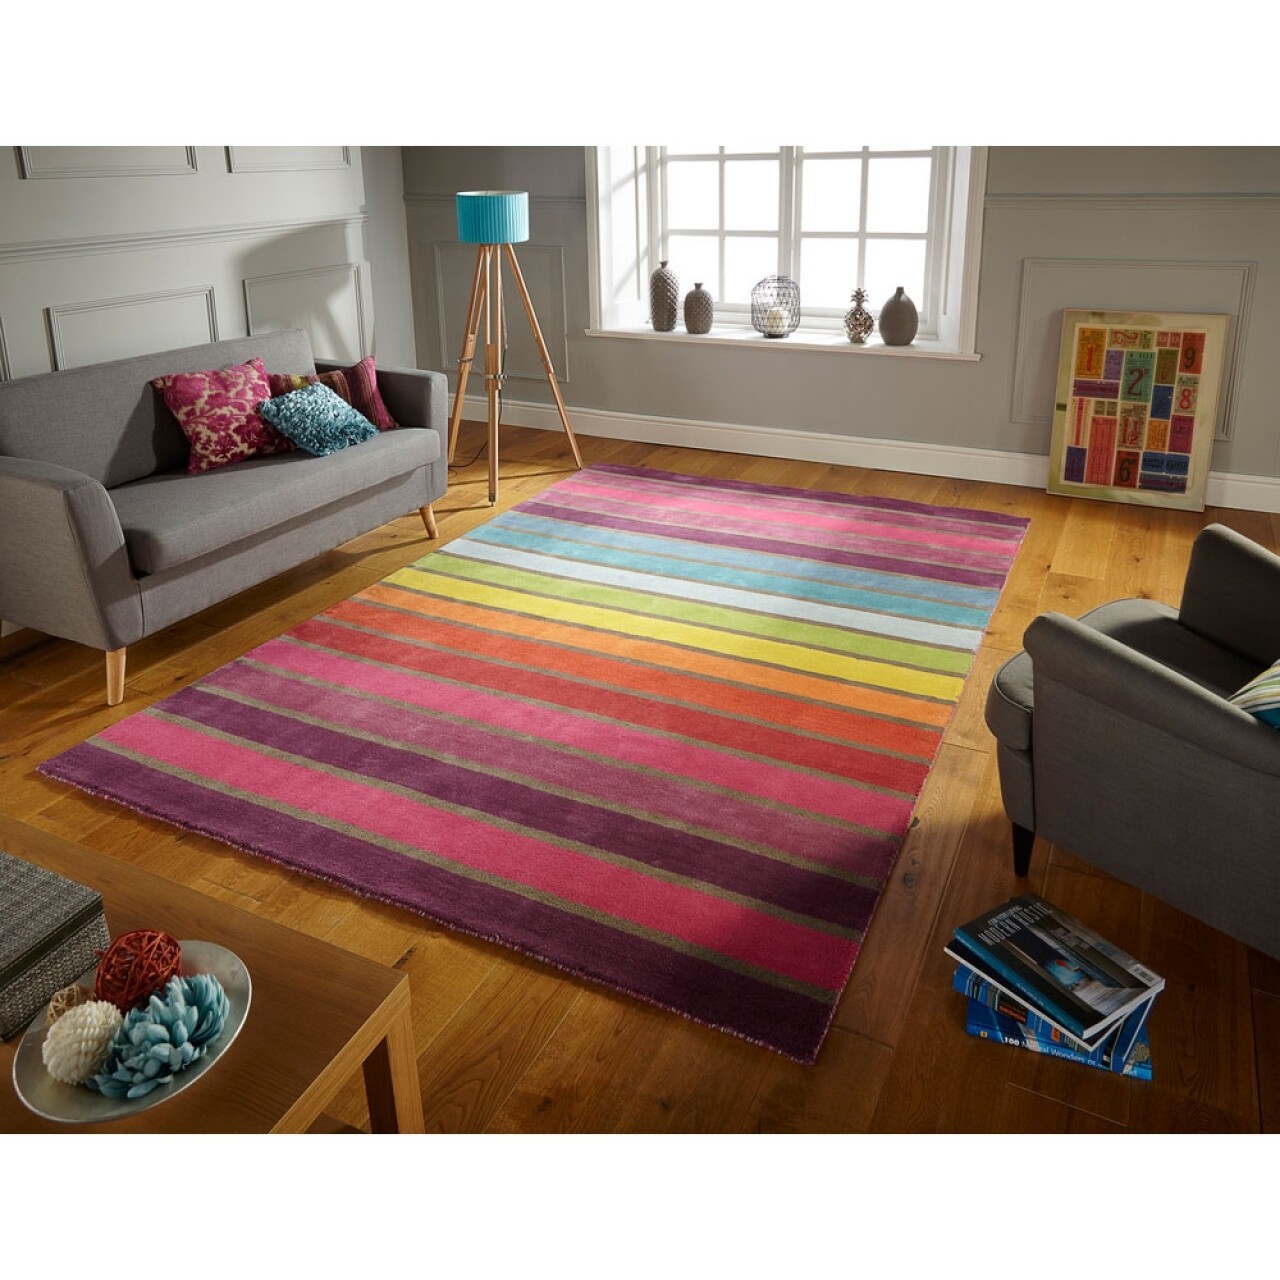 Flair Rugs Ilusion Candy Multi Color szőnyeg, Flair Szőnyegek, 80 x 150 cm, 100% gyapjú, sokszínű